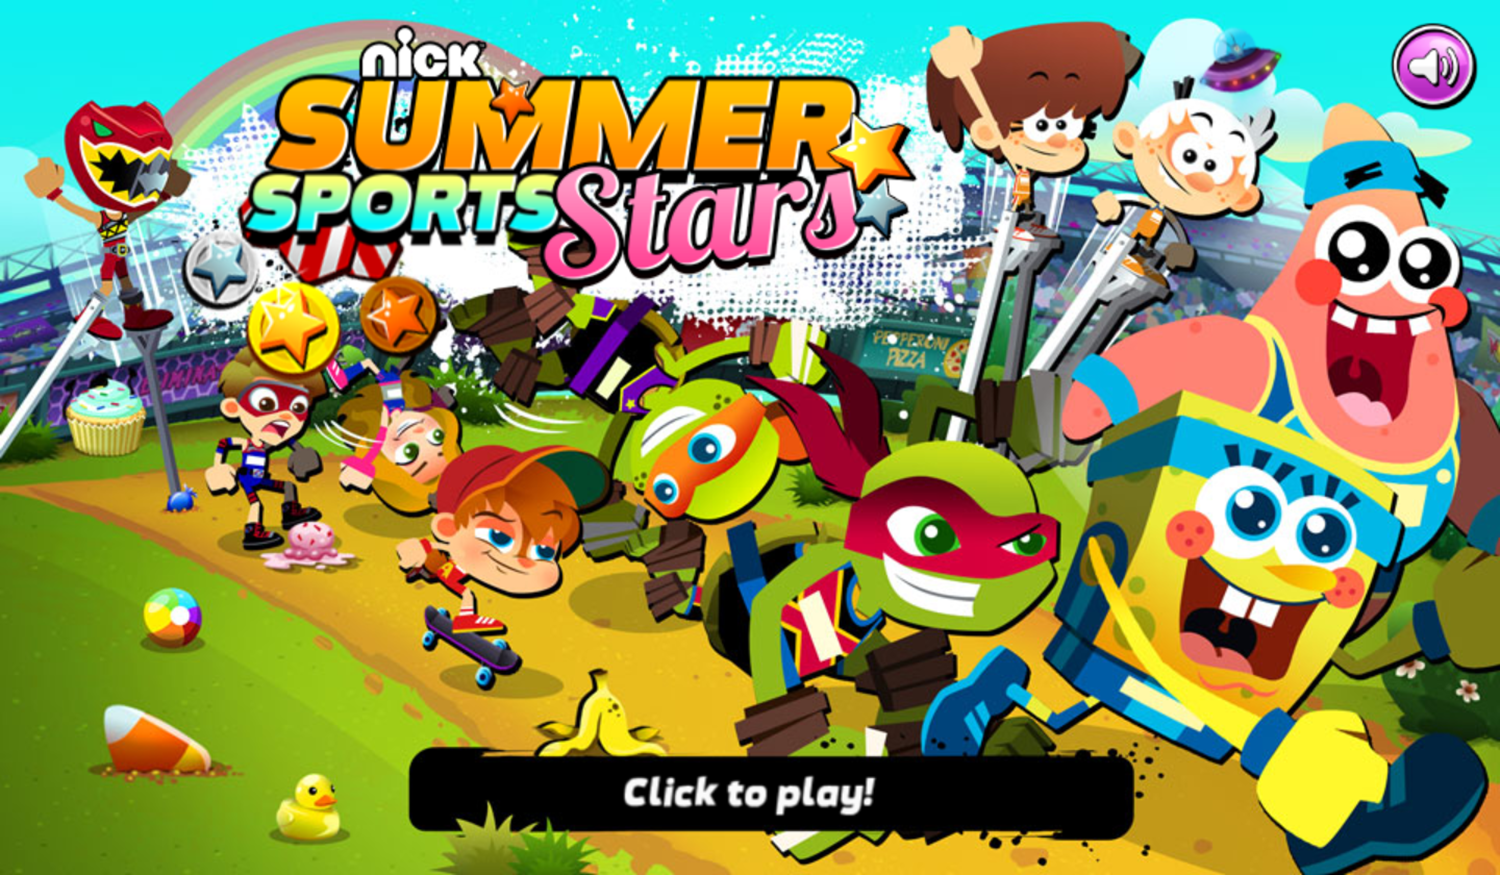 Nick Summer Sports Stars Welcome Screen Screenshot.